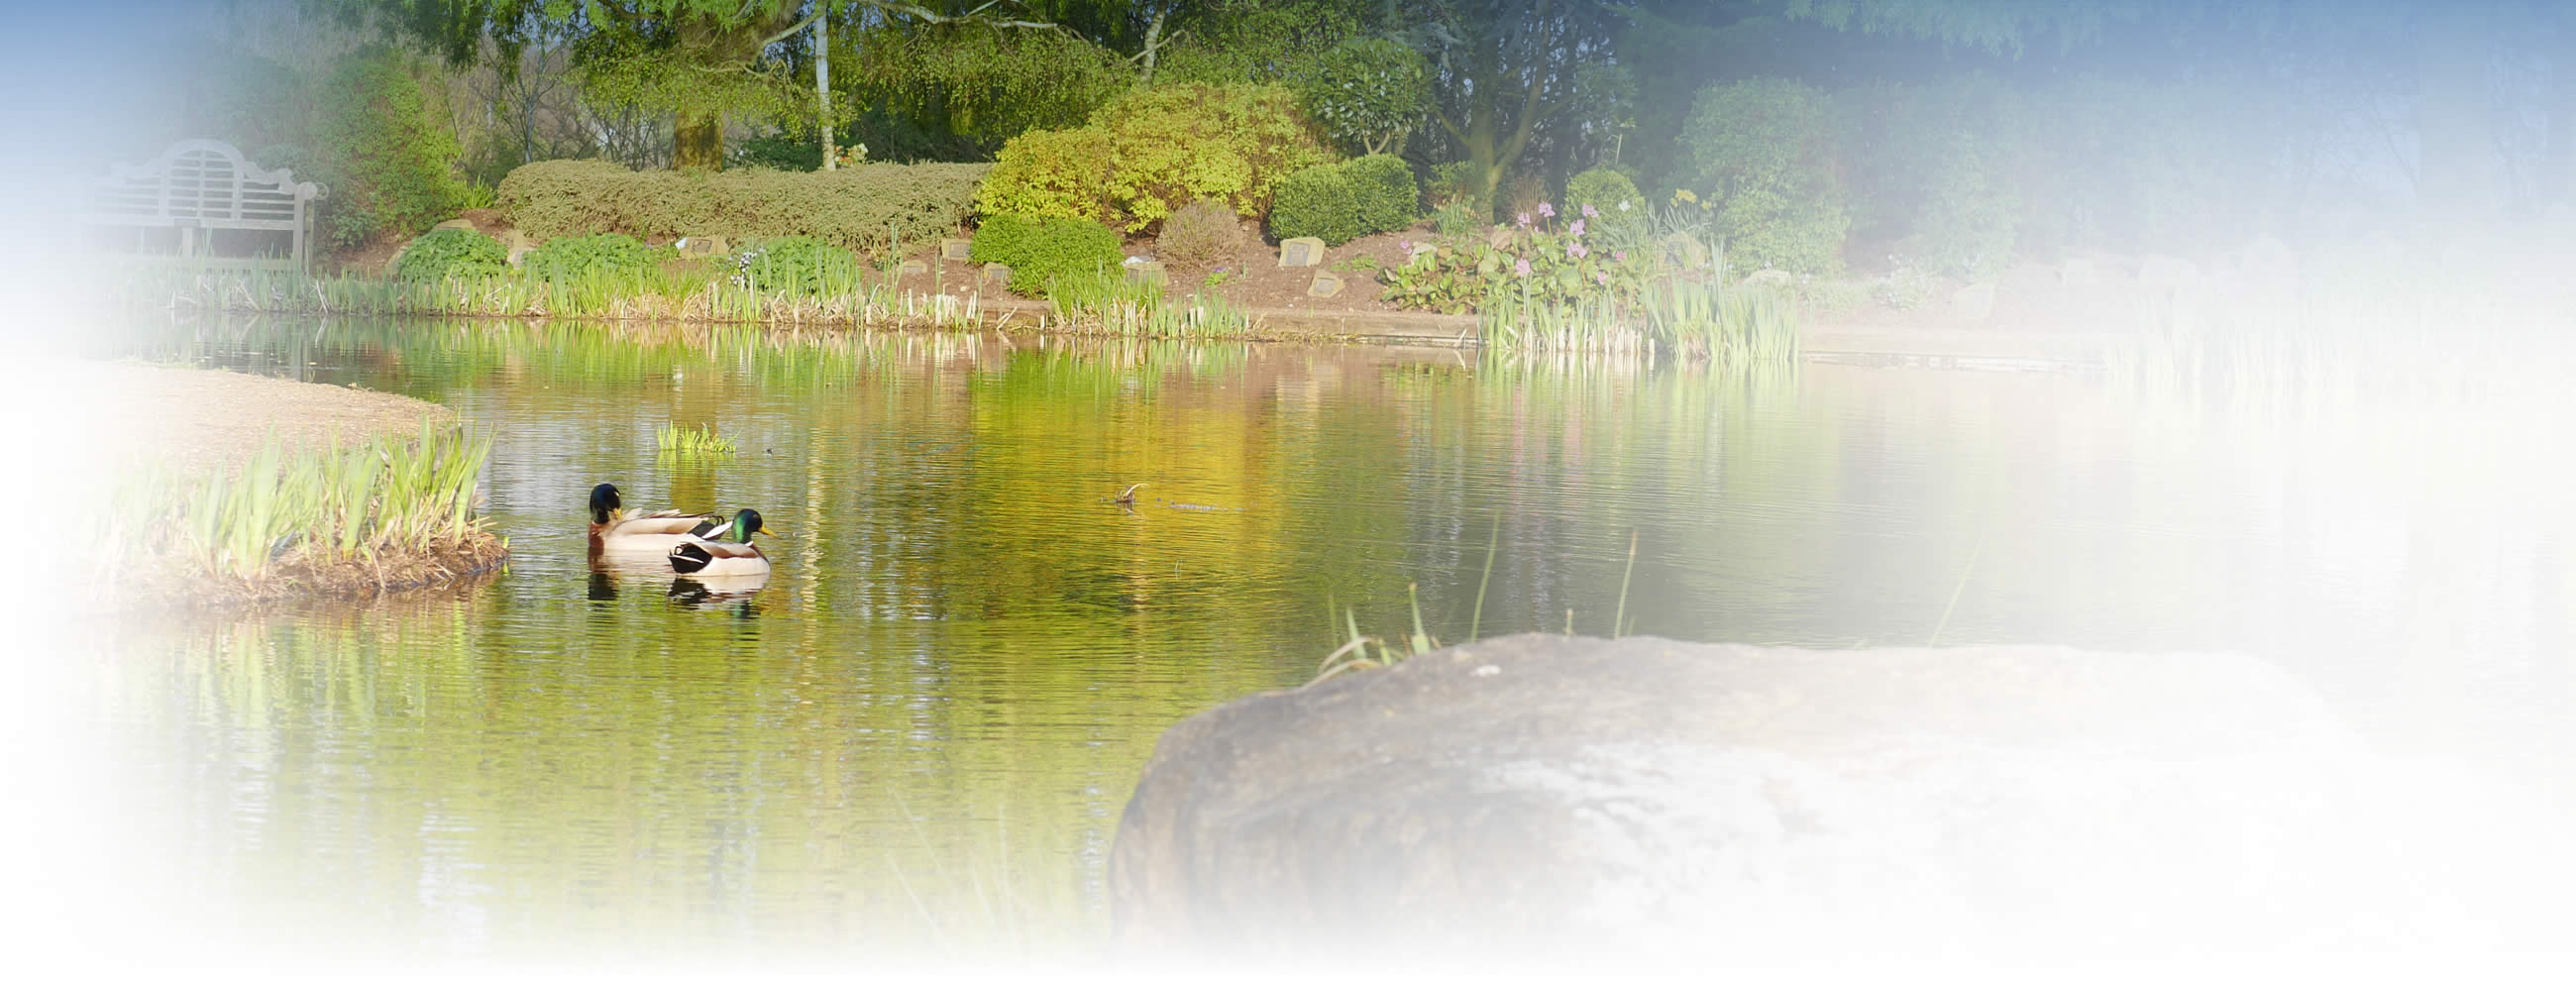 Harwood Park lake with Ducks